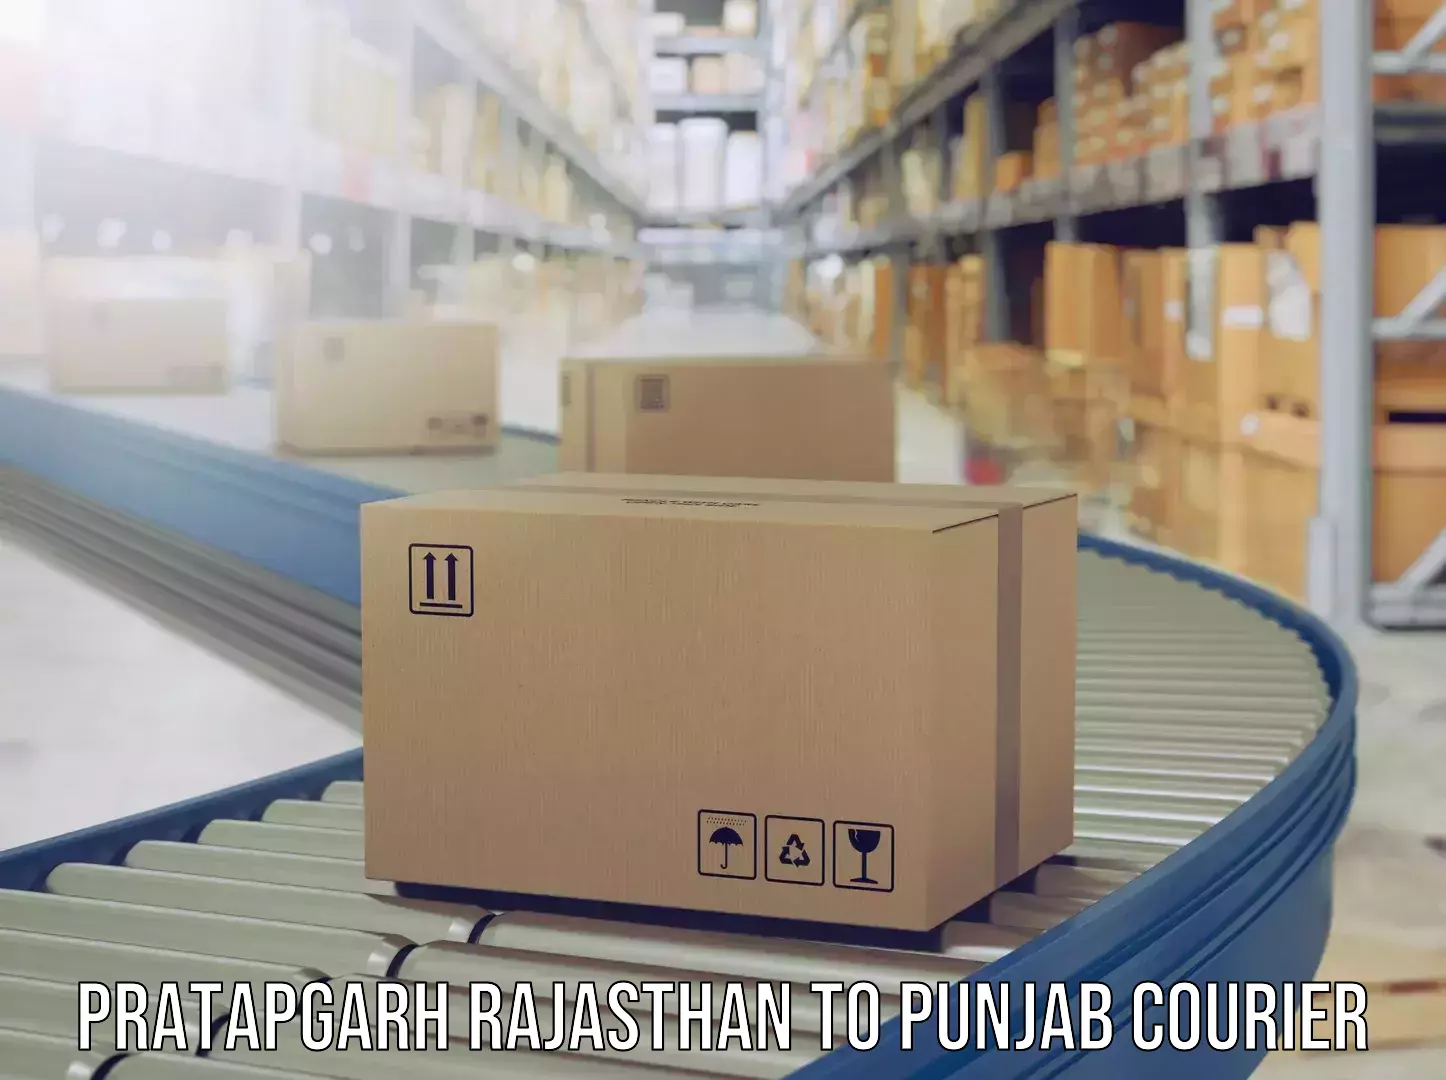 Luggage delivery providers Pratapgarh Rajasthan to Punjab